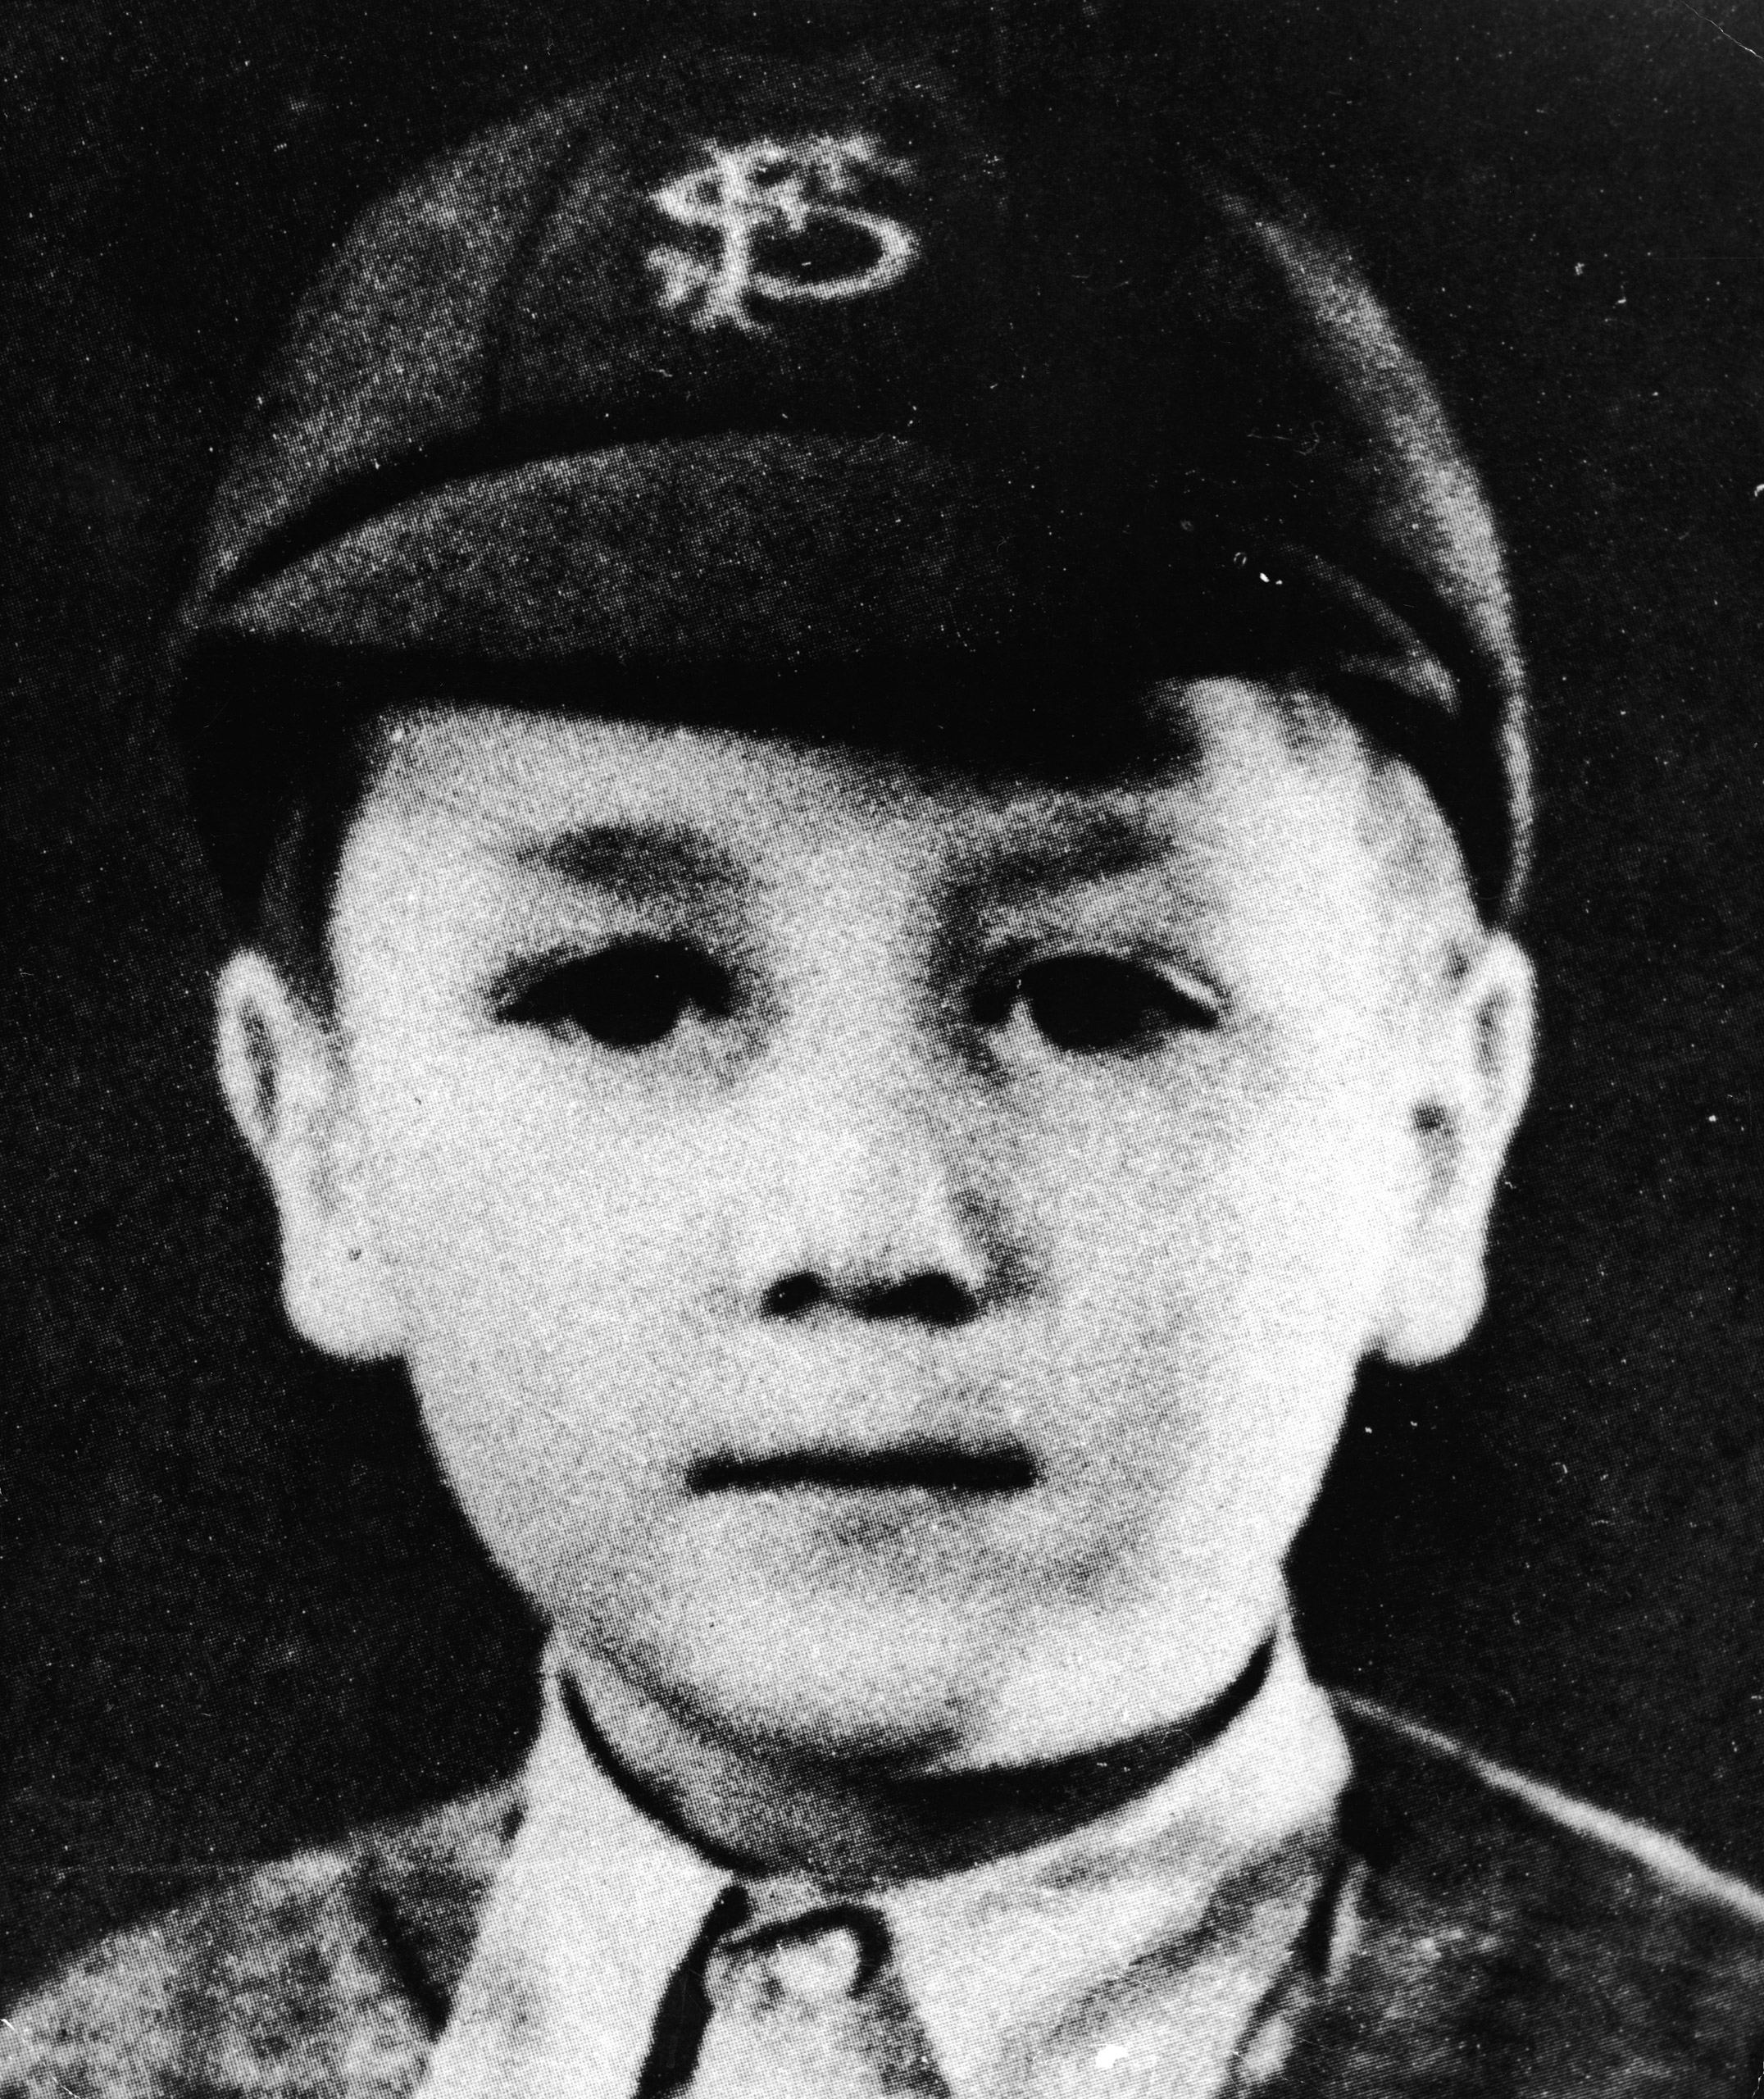 Portrait of John Lennon as a child, circa 1948.